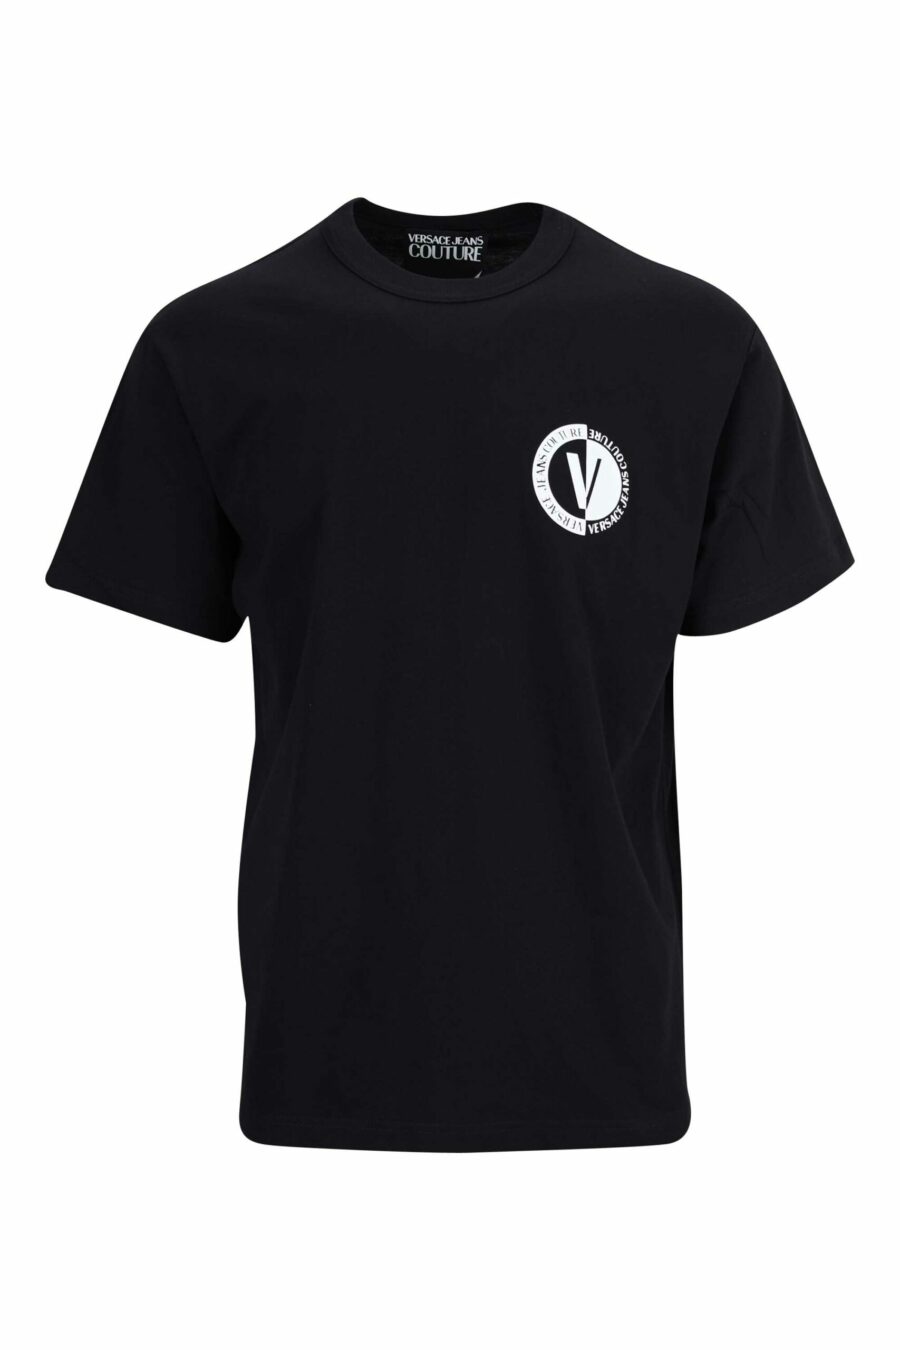 Schwarzes T-Shirt mit kontrastierendem kreisförmigem Mini-Logo - 8052019471700 skaliert